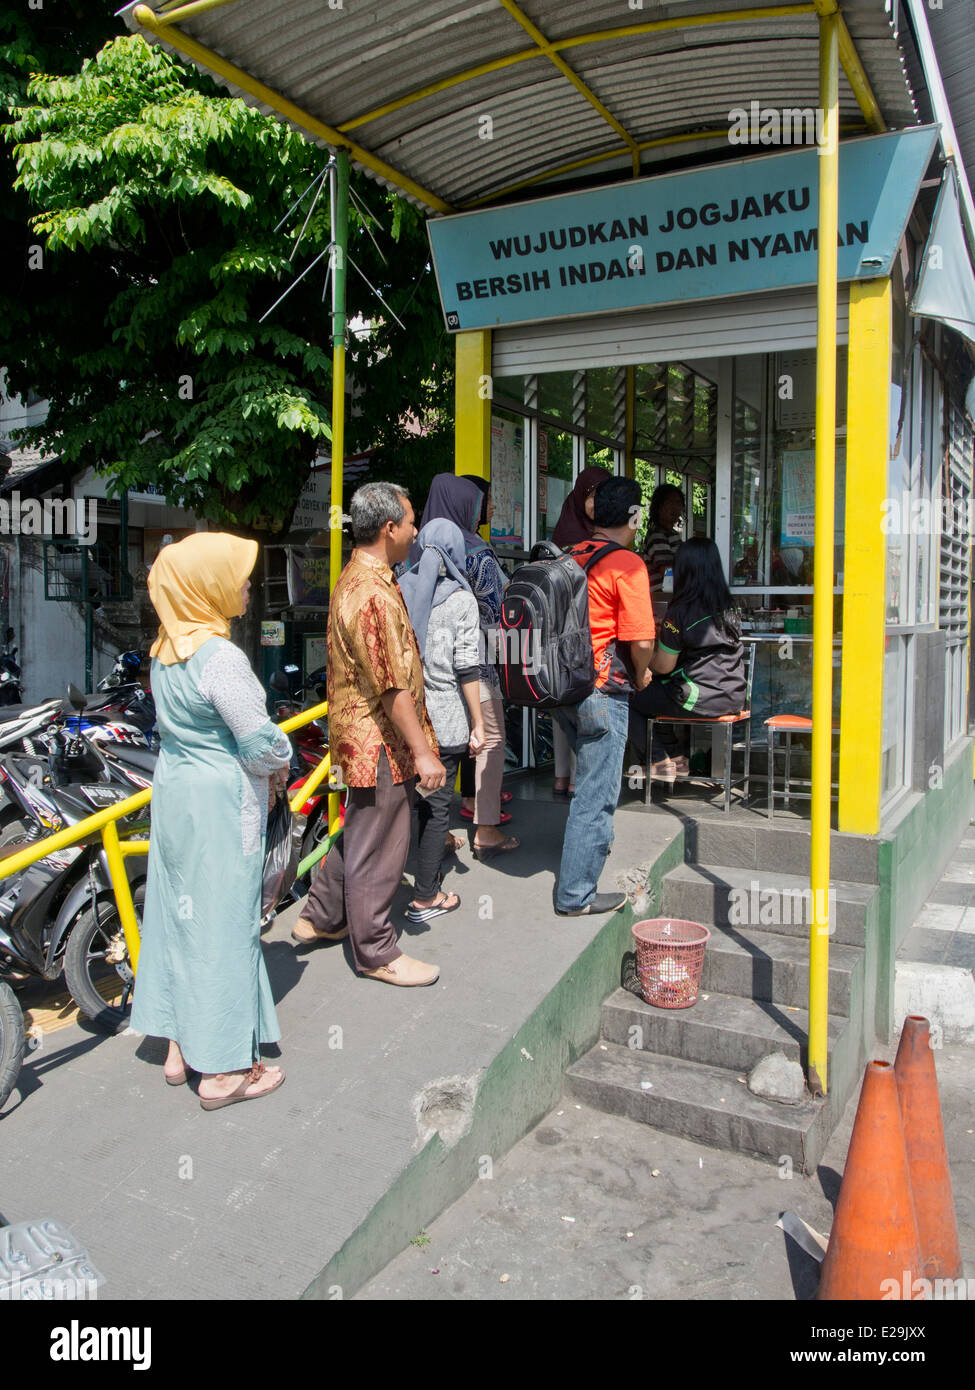 Passengers queue at bus  stop  in Yogyakarta Indonesia  